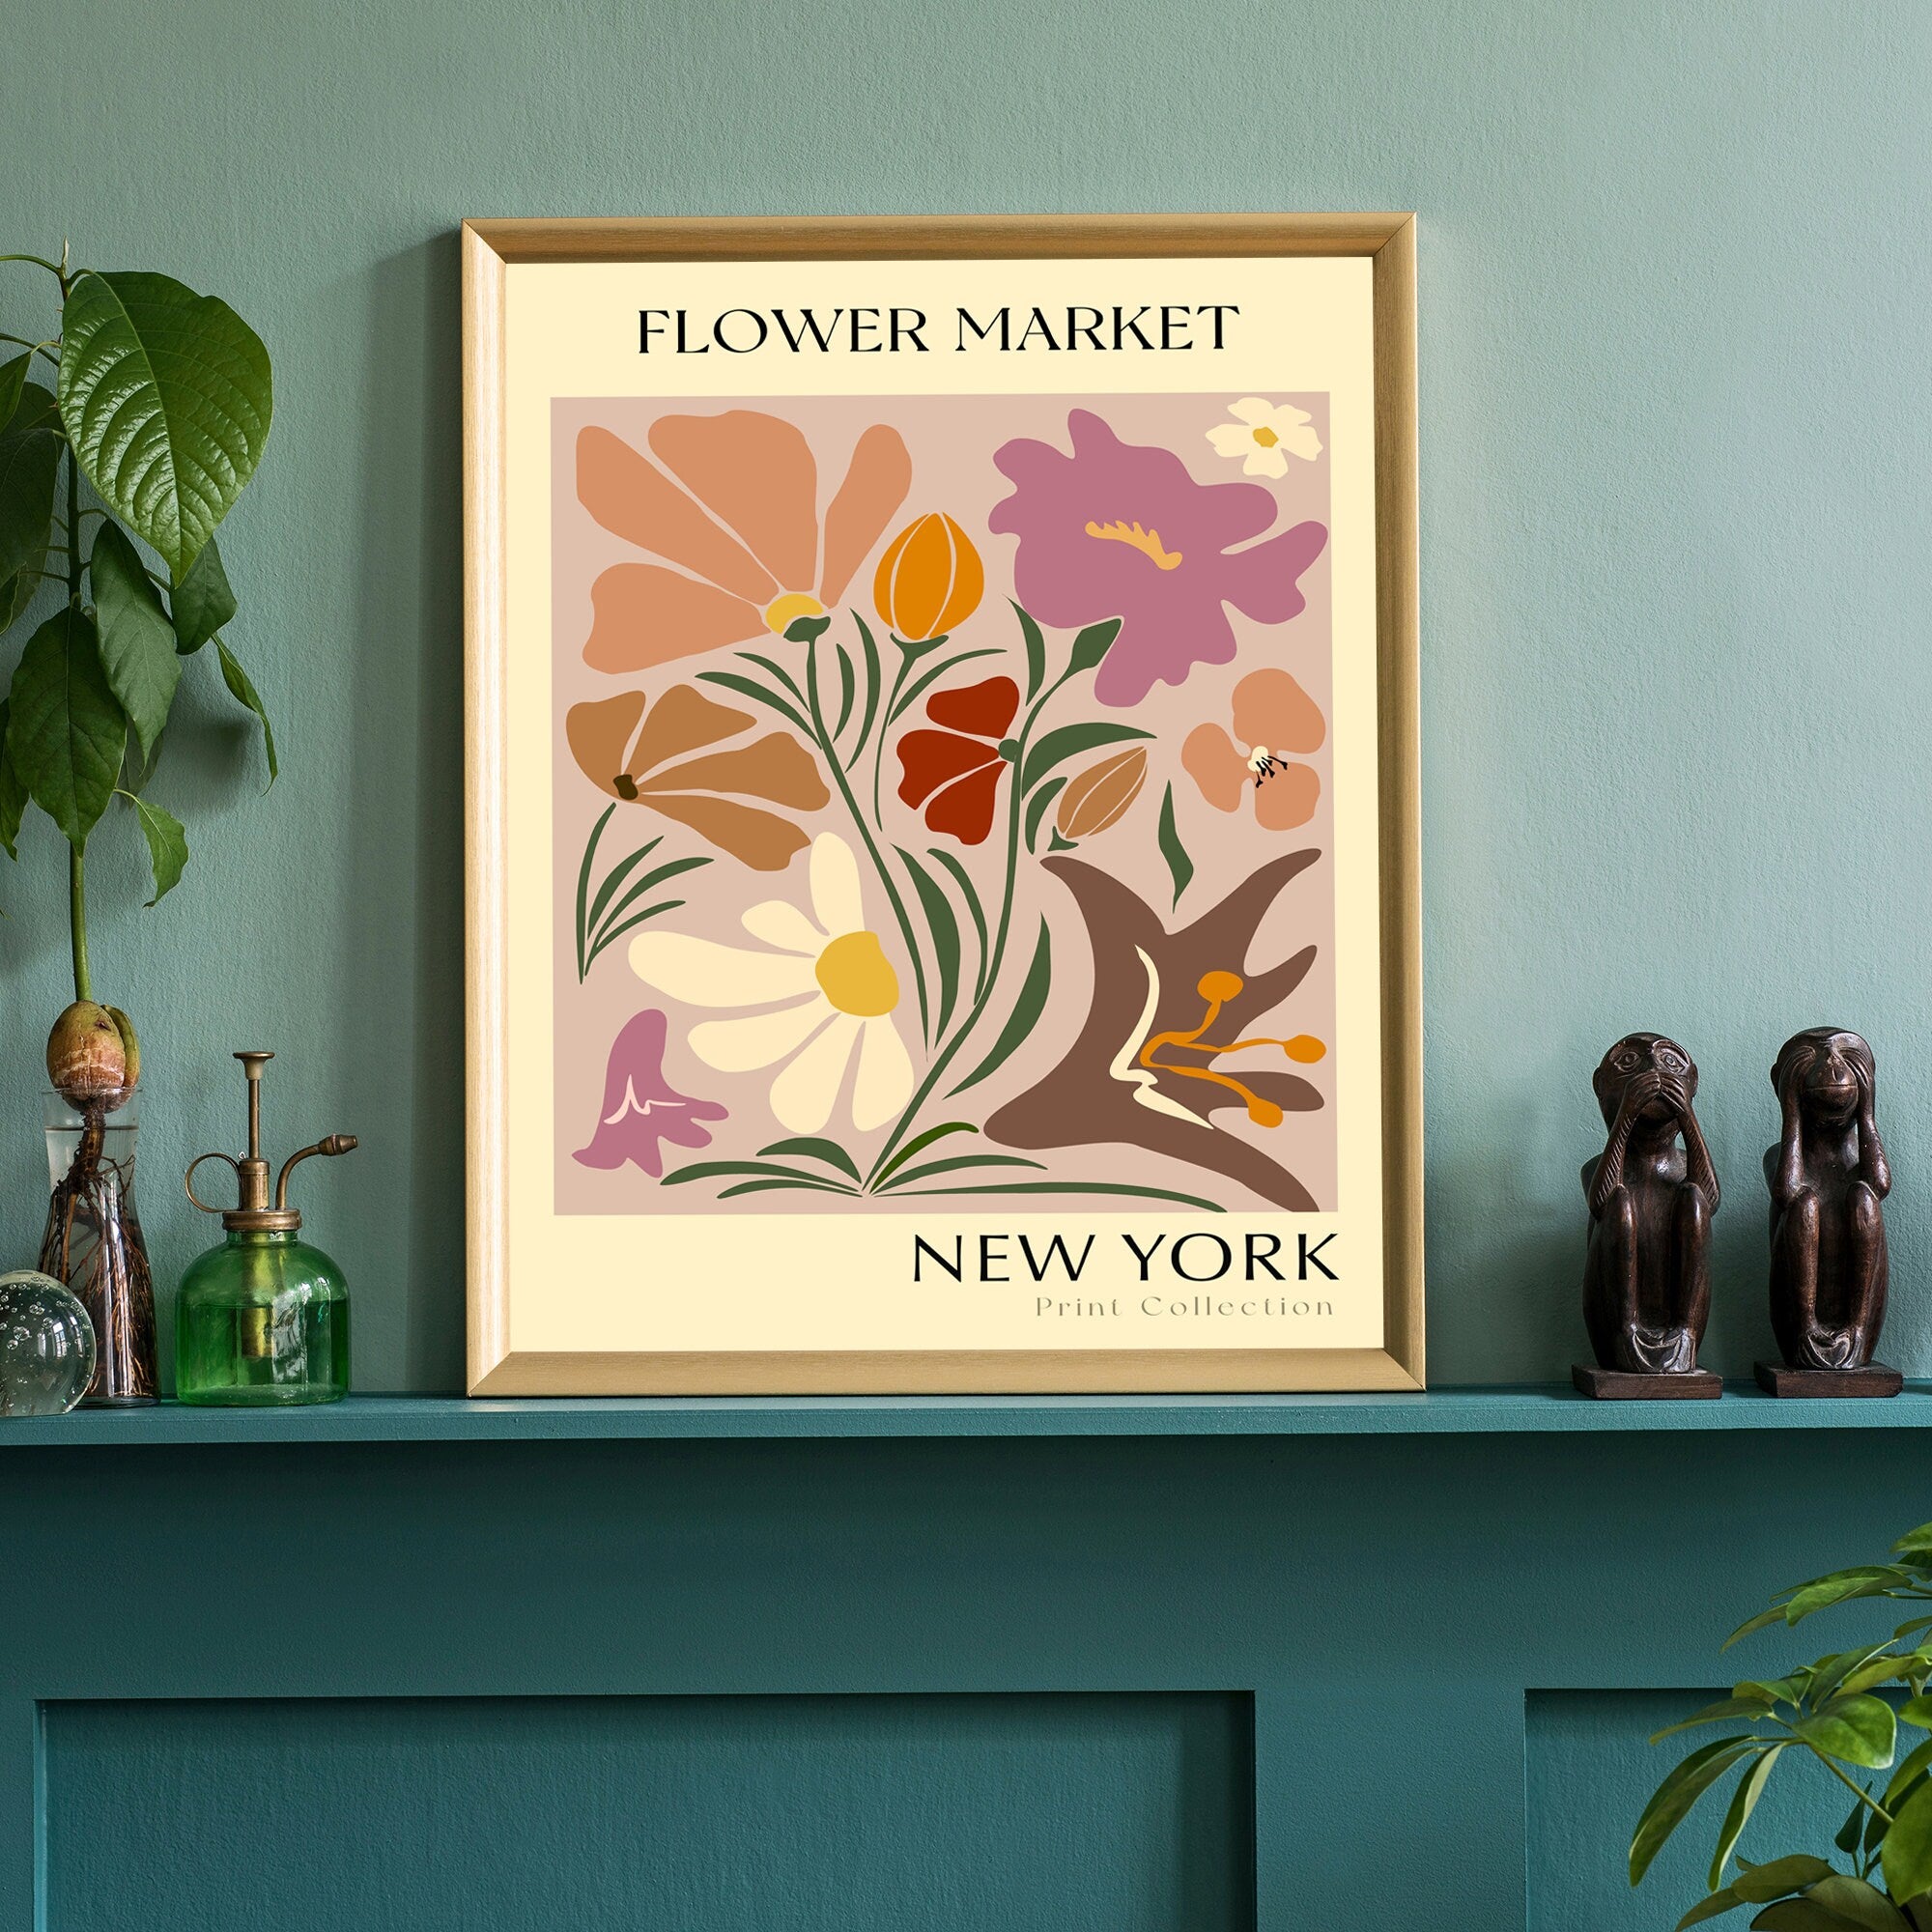 New York State flower print, USA states poster, New York flower market poster, Botanical poster, Nature poster artwork, Boho floral wall art